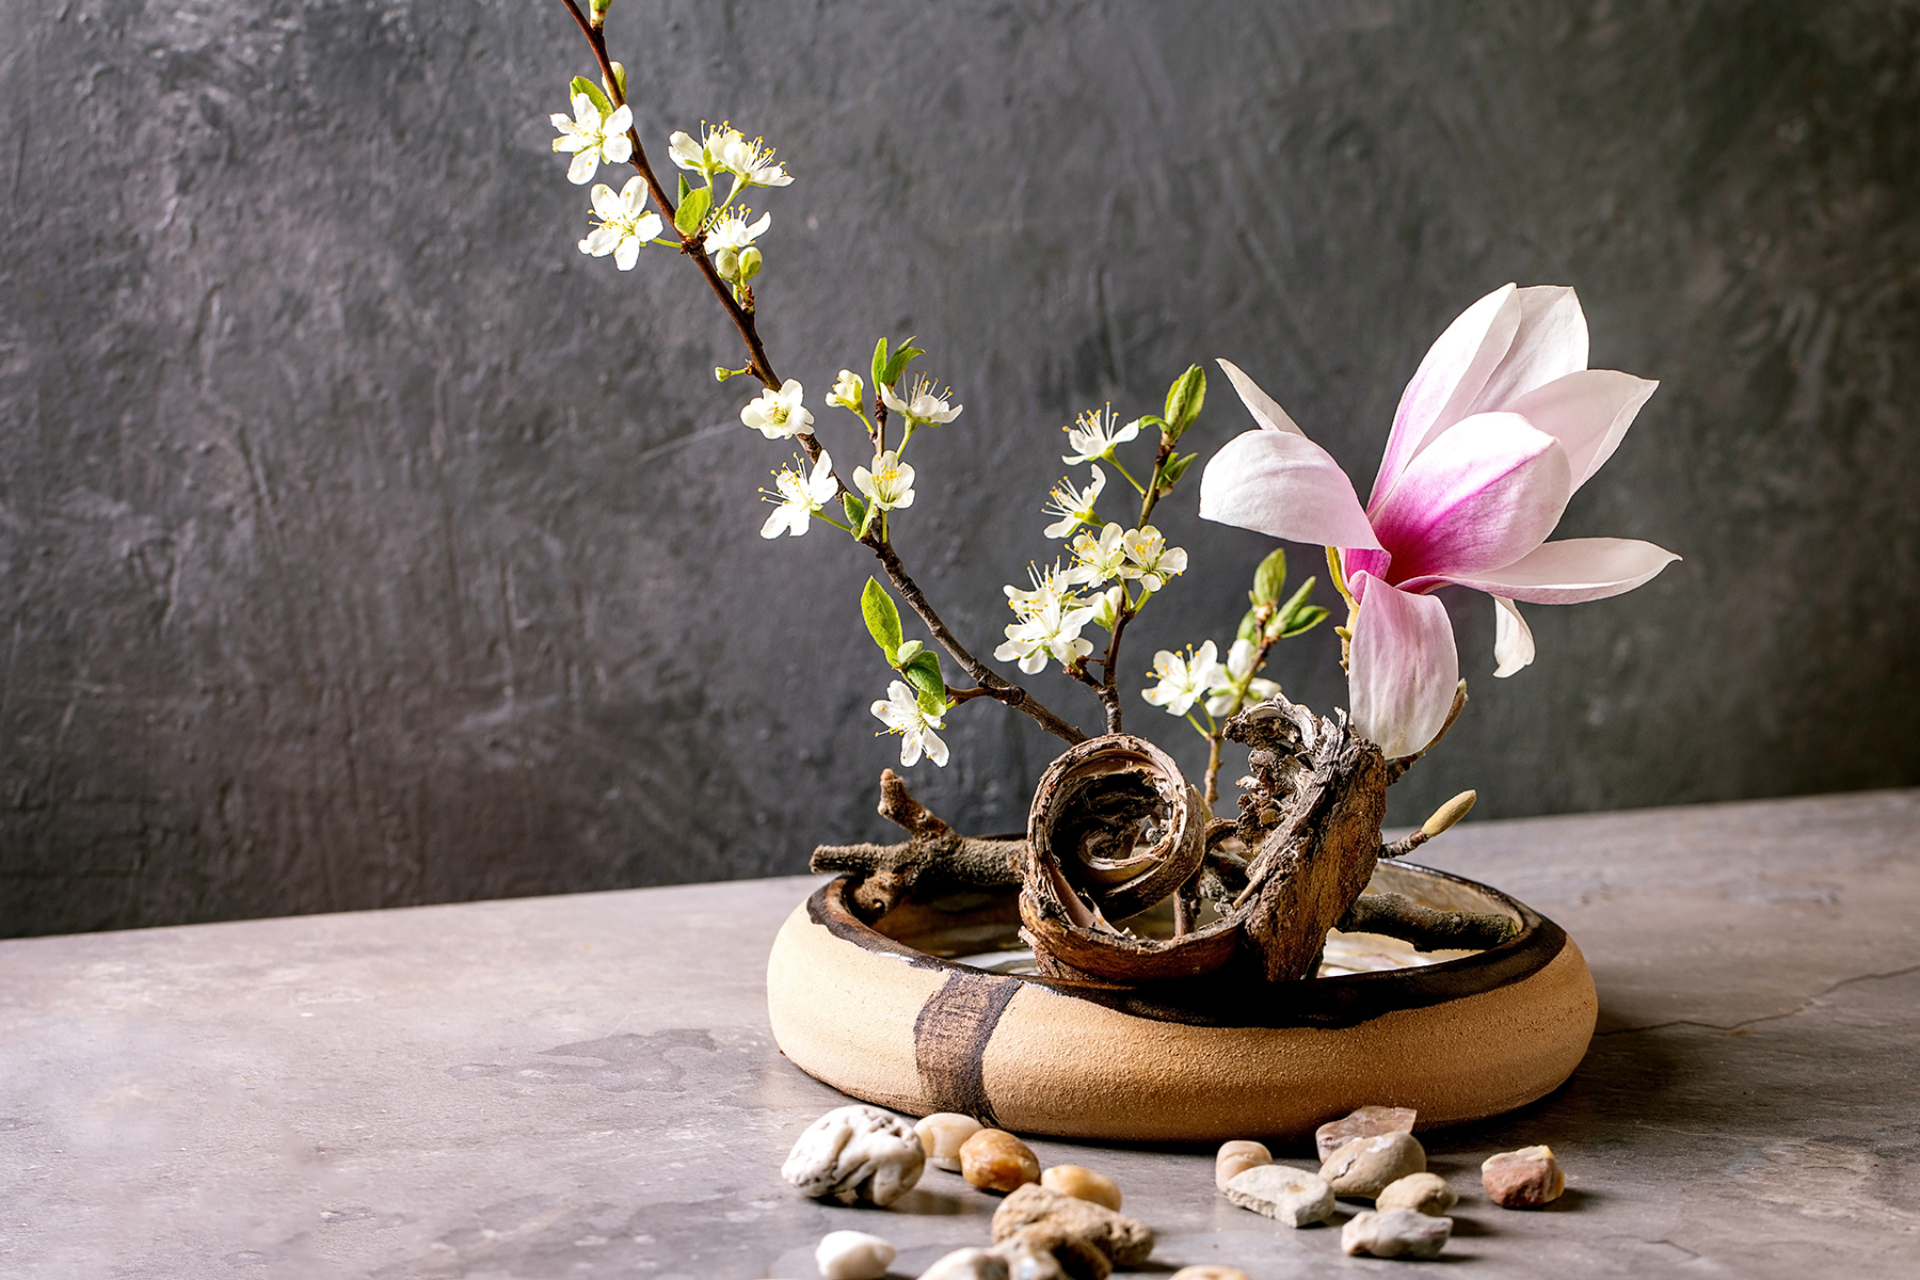 A Japanese flower arrangement featuring spring blooms.